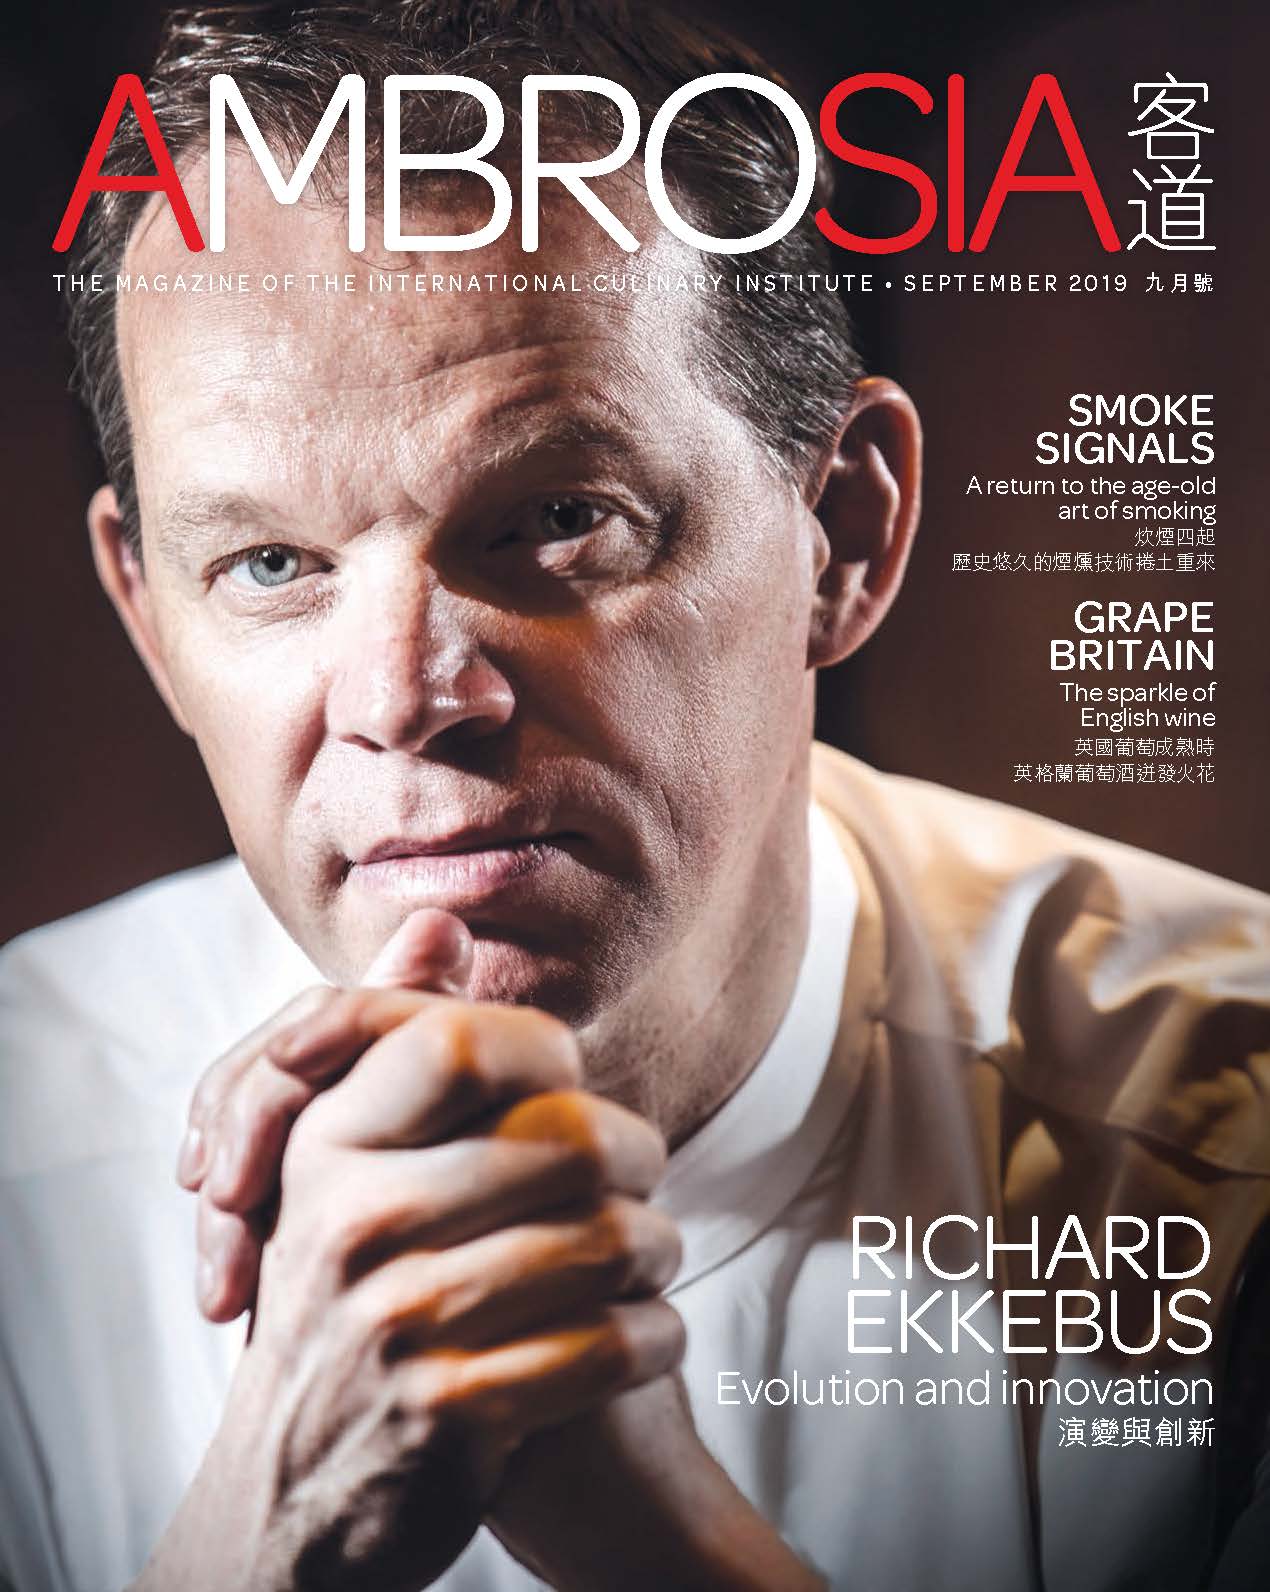 AMBROSIA (September 2019 issue)